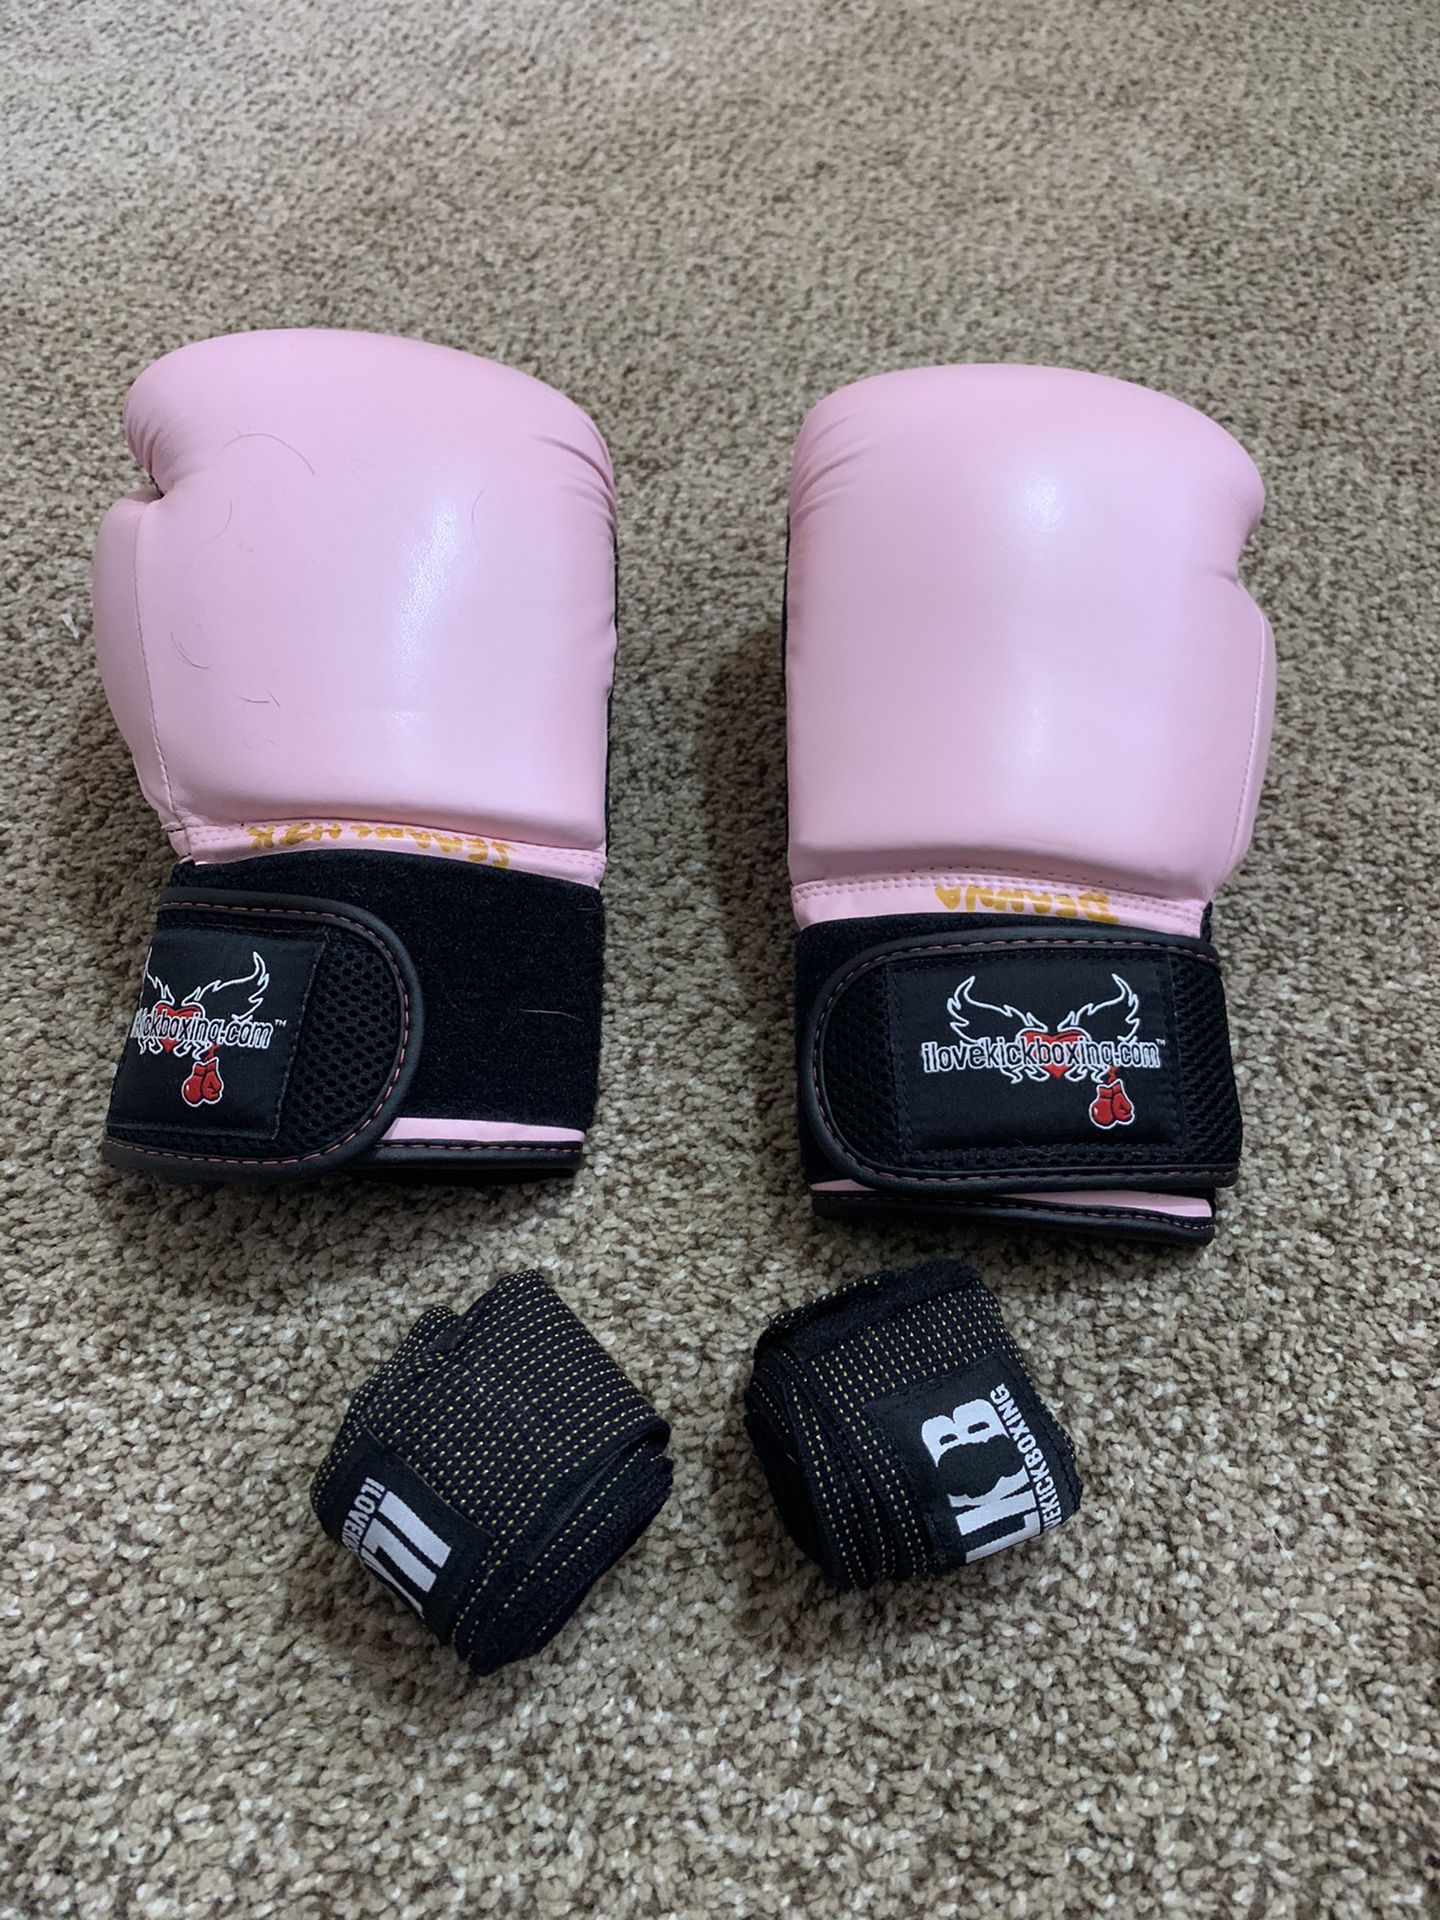 Women’s boxing glove set